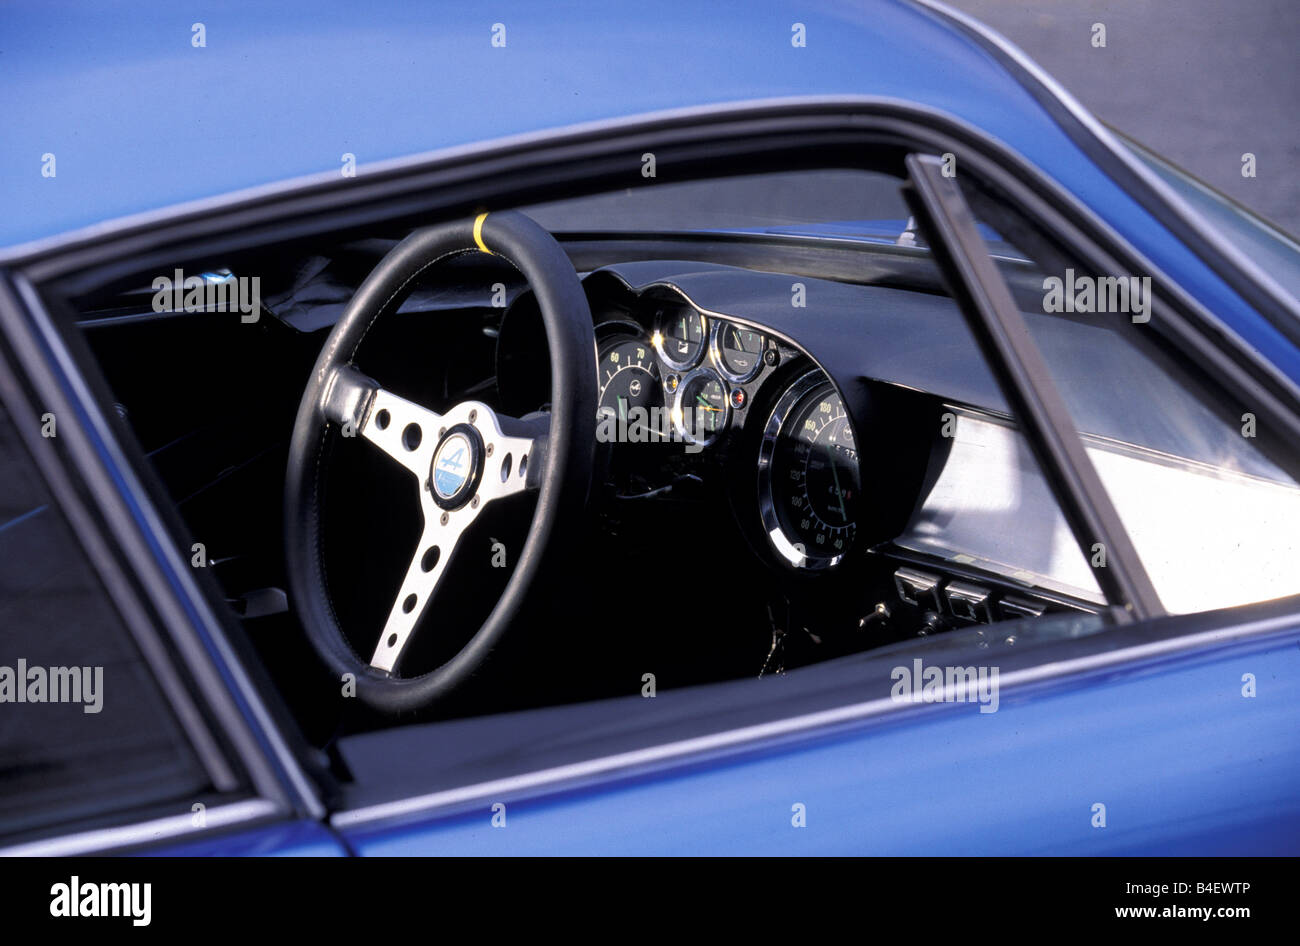 Car, Renault Alpine A110, sports car, Coupé, Coupe, blue, model year 1962-1977, vintage car, 1960s, sixties, interior, Cockpit, Stock Photo